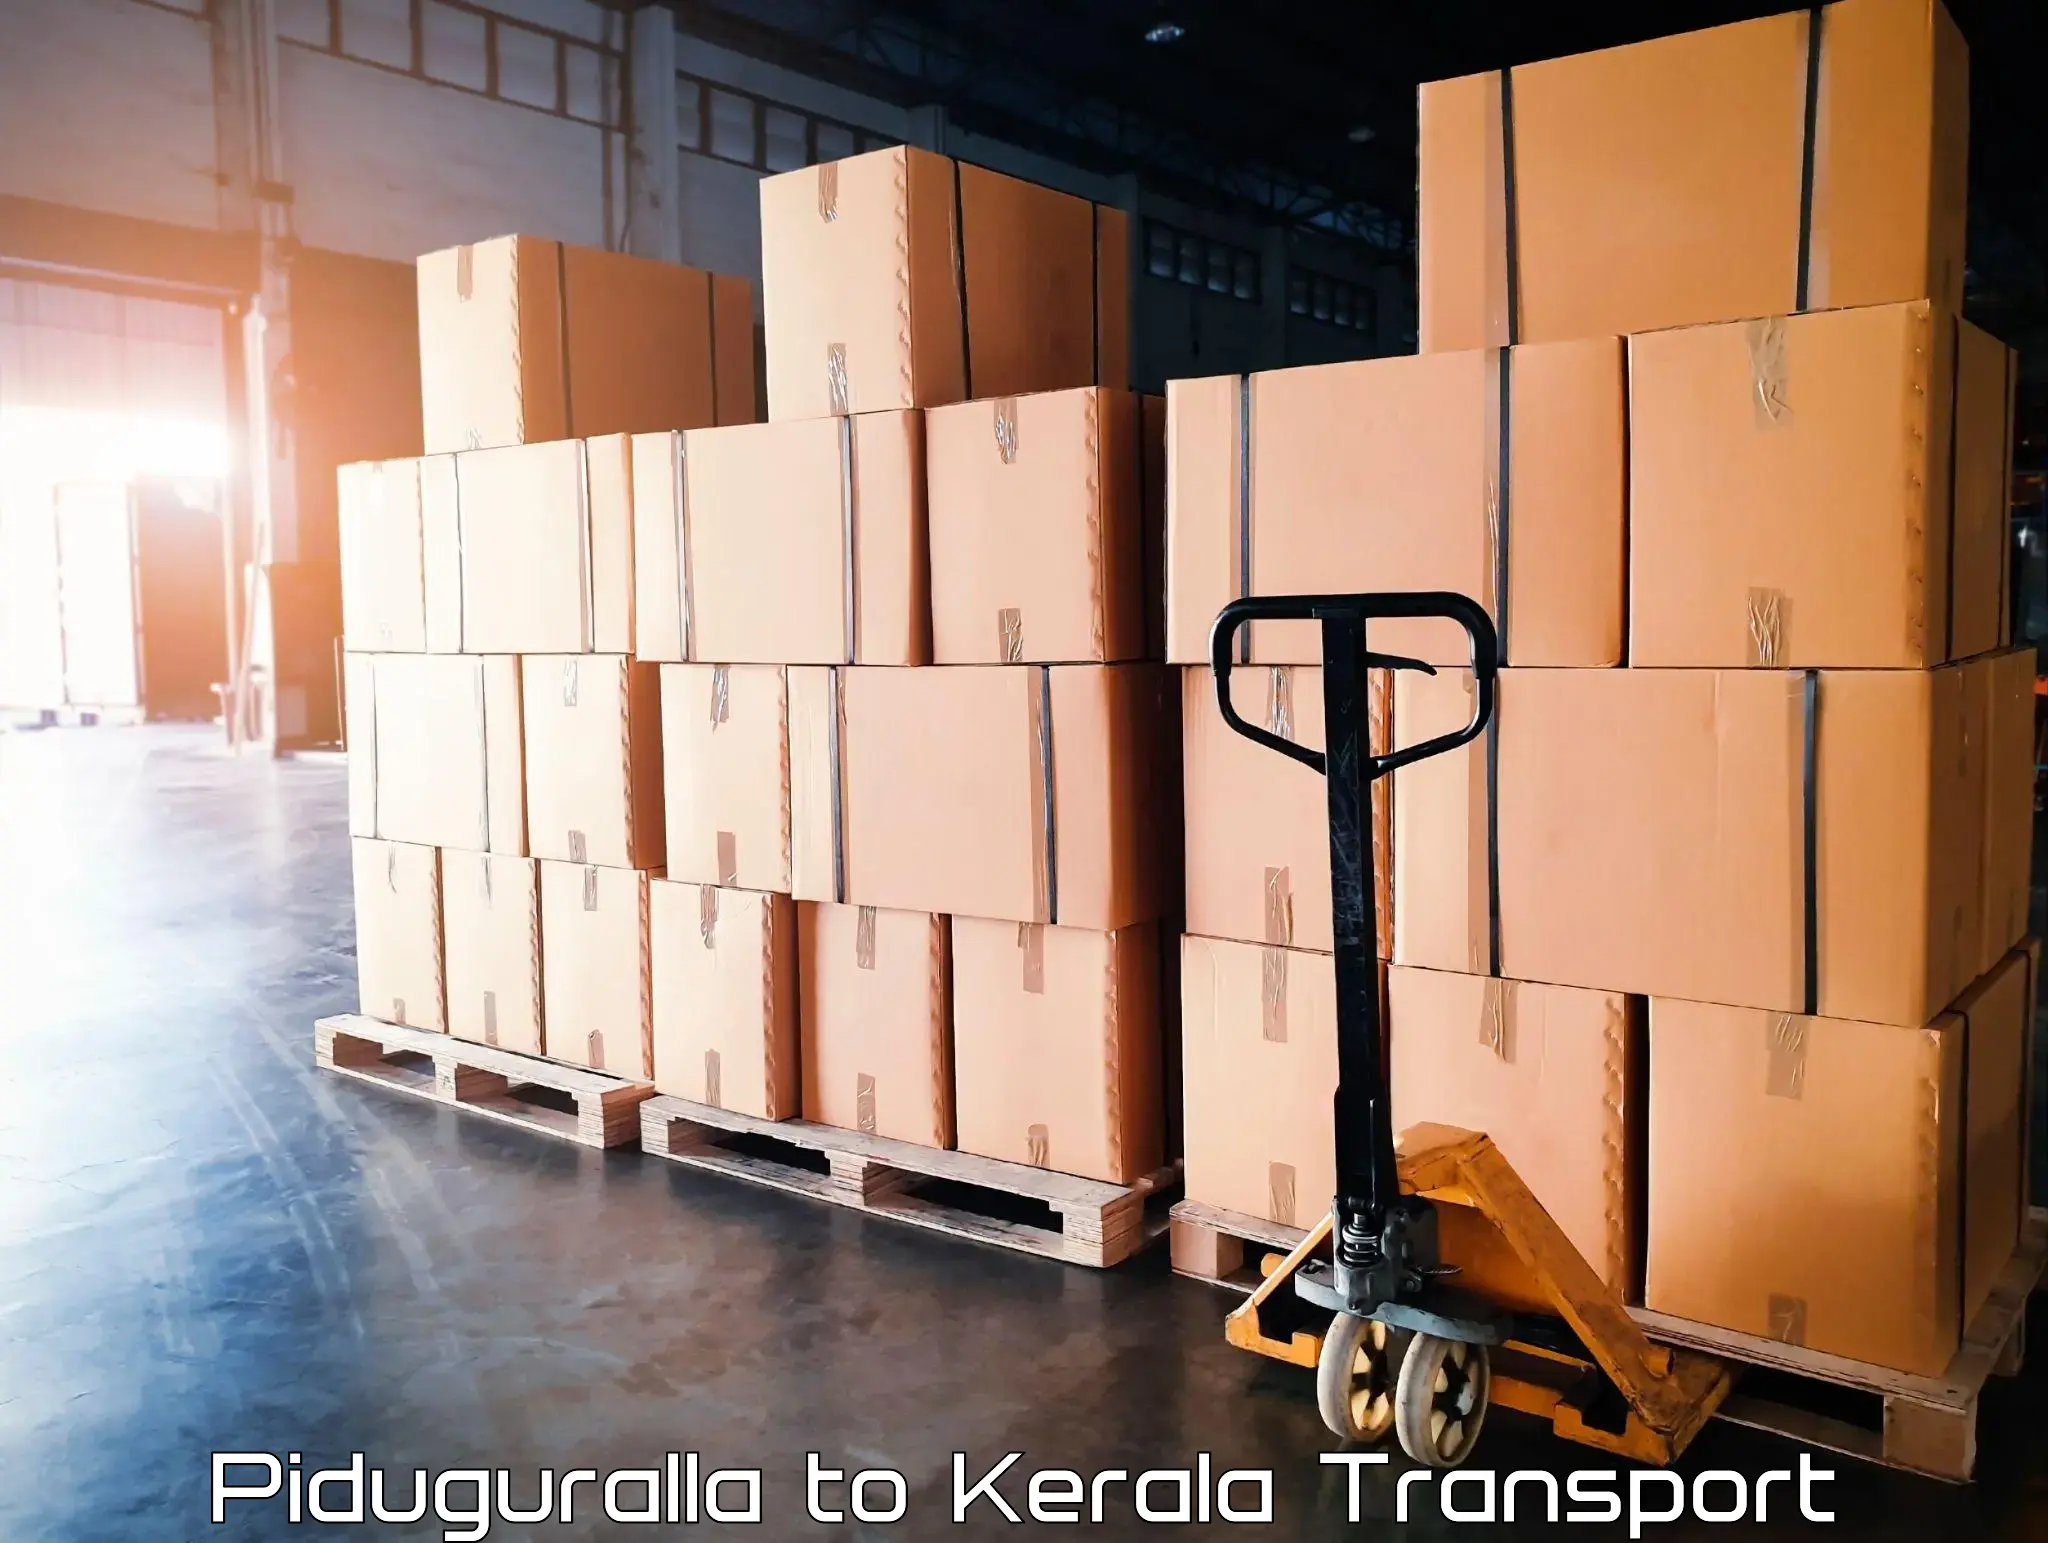 Transport shared services in Piduguralla to Kiliyanthara